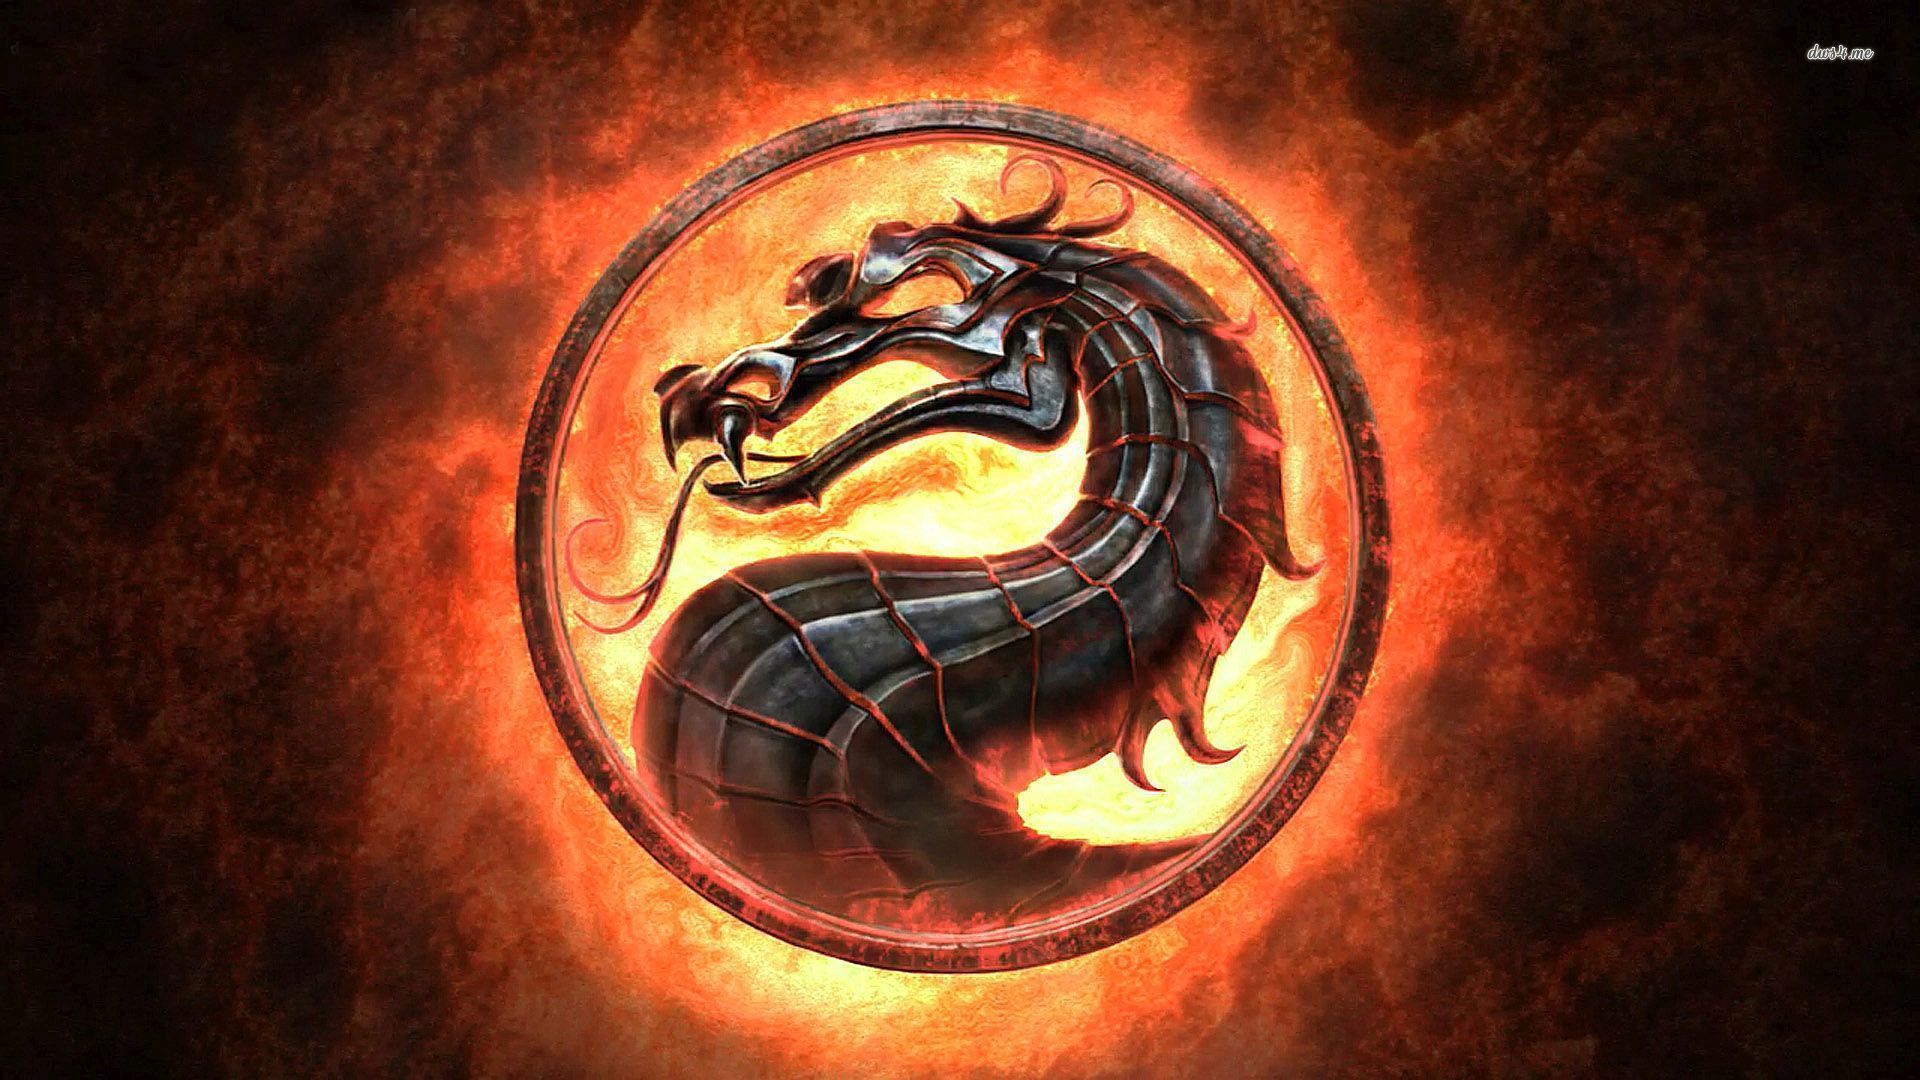 Mortal Kombat Dragon Logo wallpaper - Game wallpapers